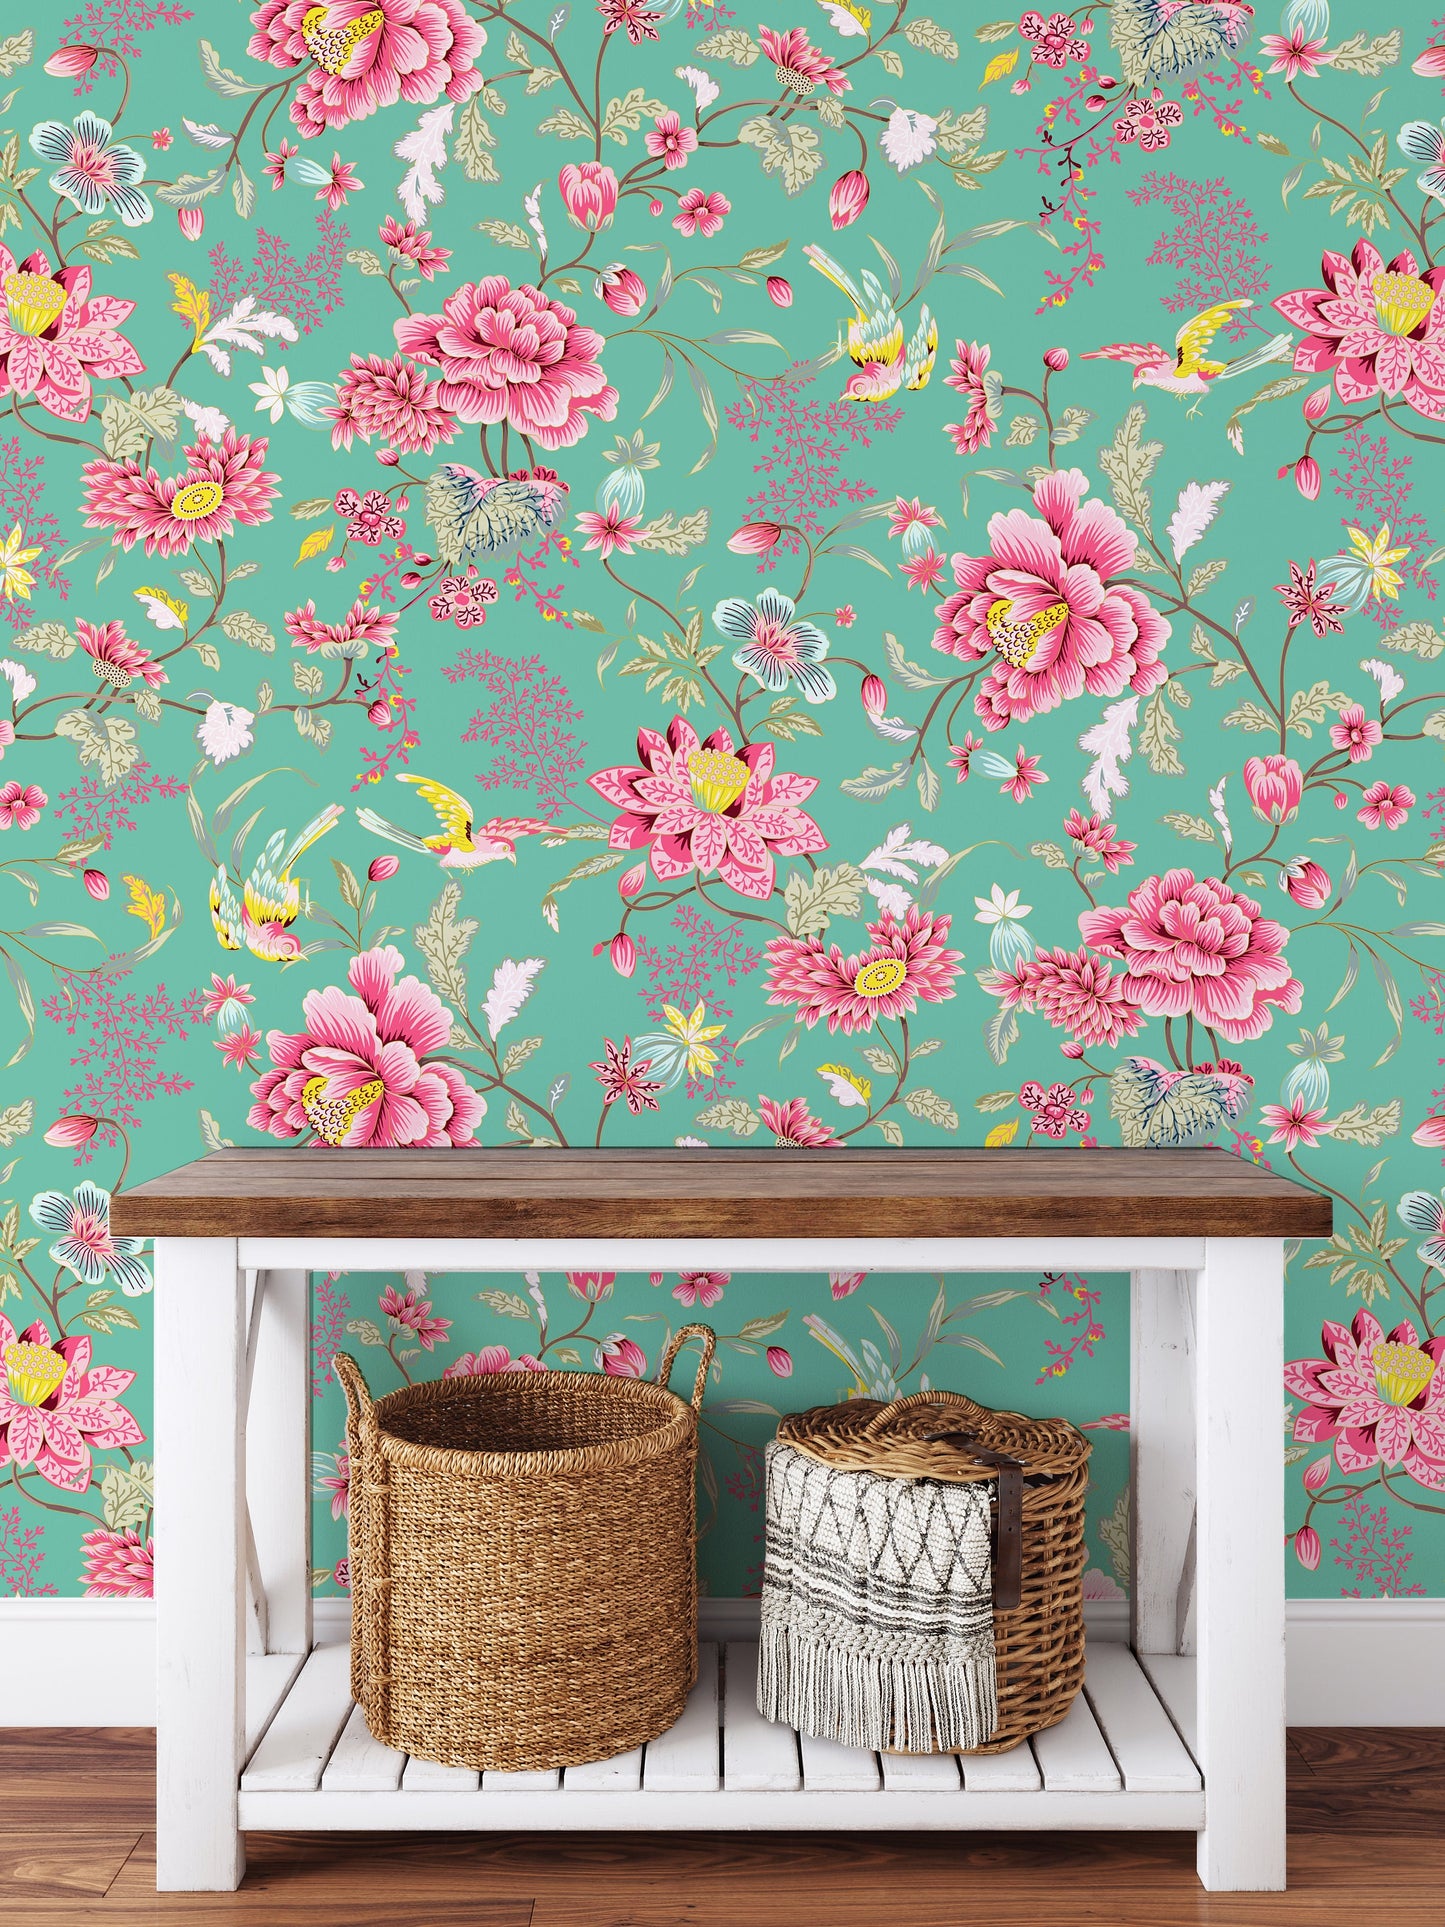 Detailed Floral Wallpaper